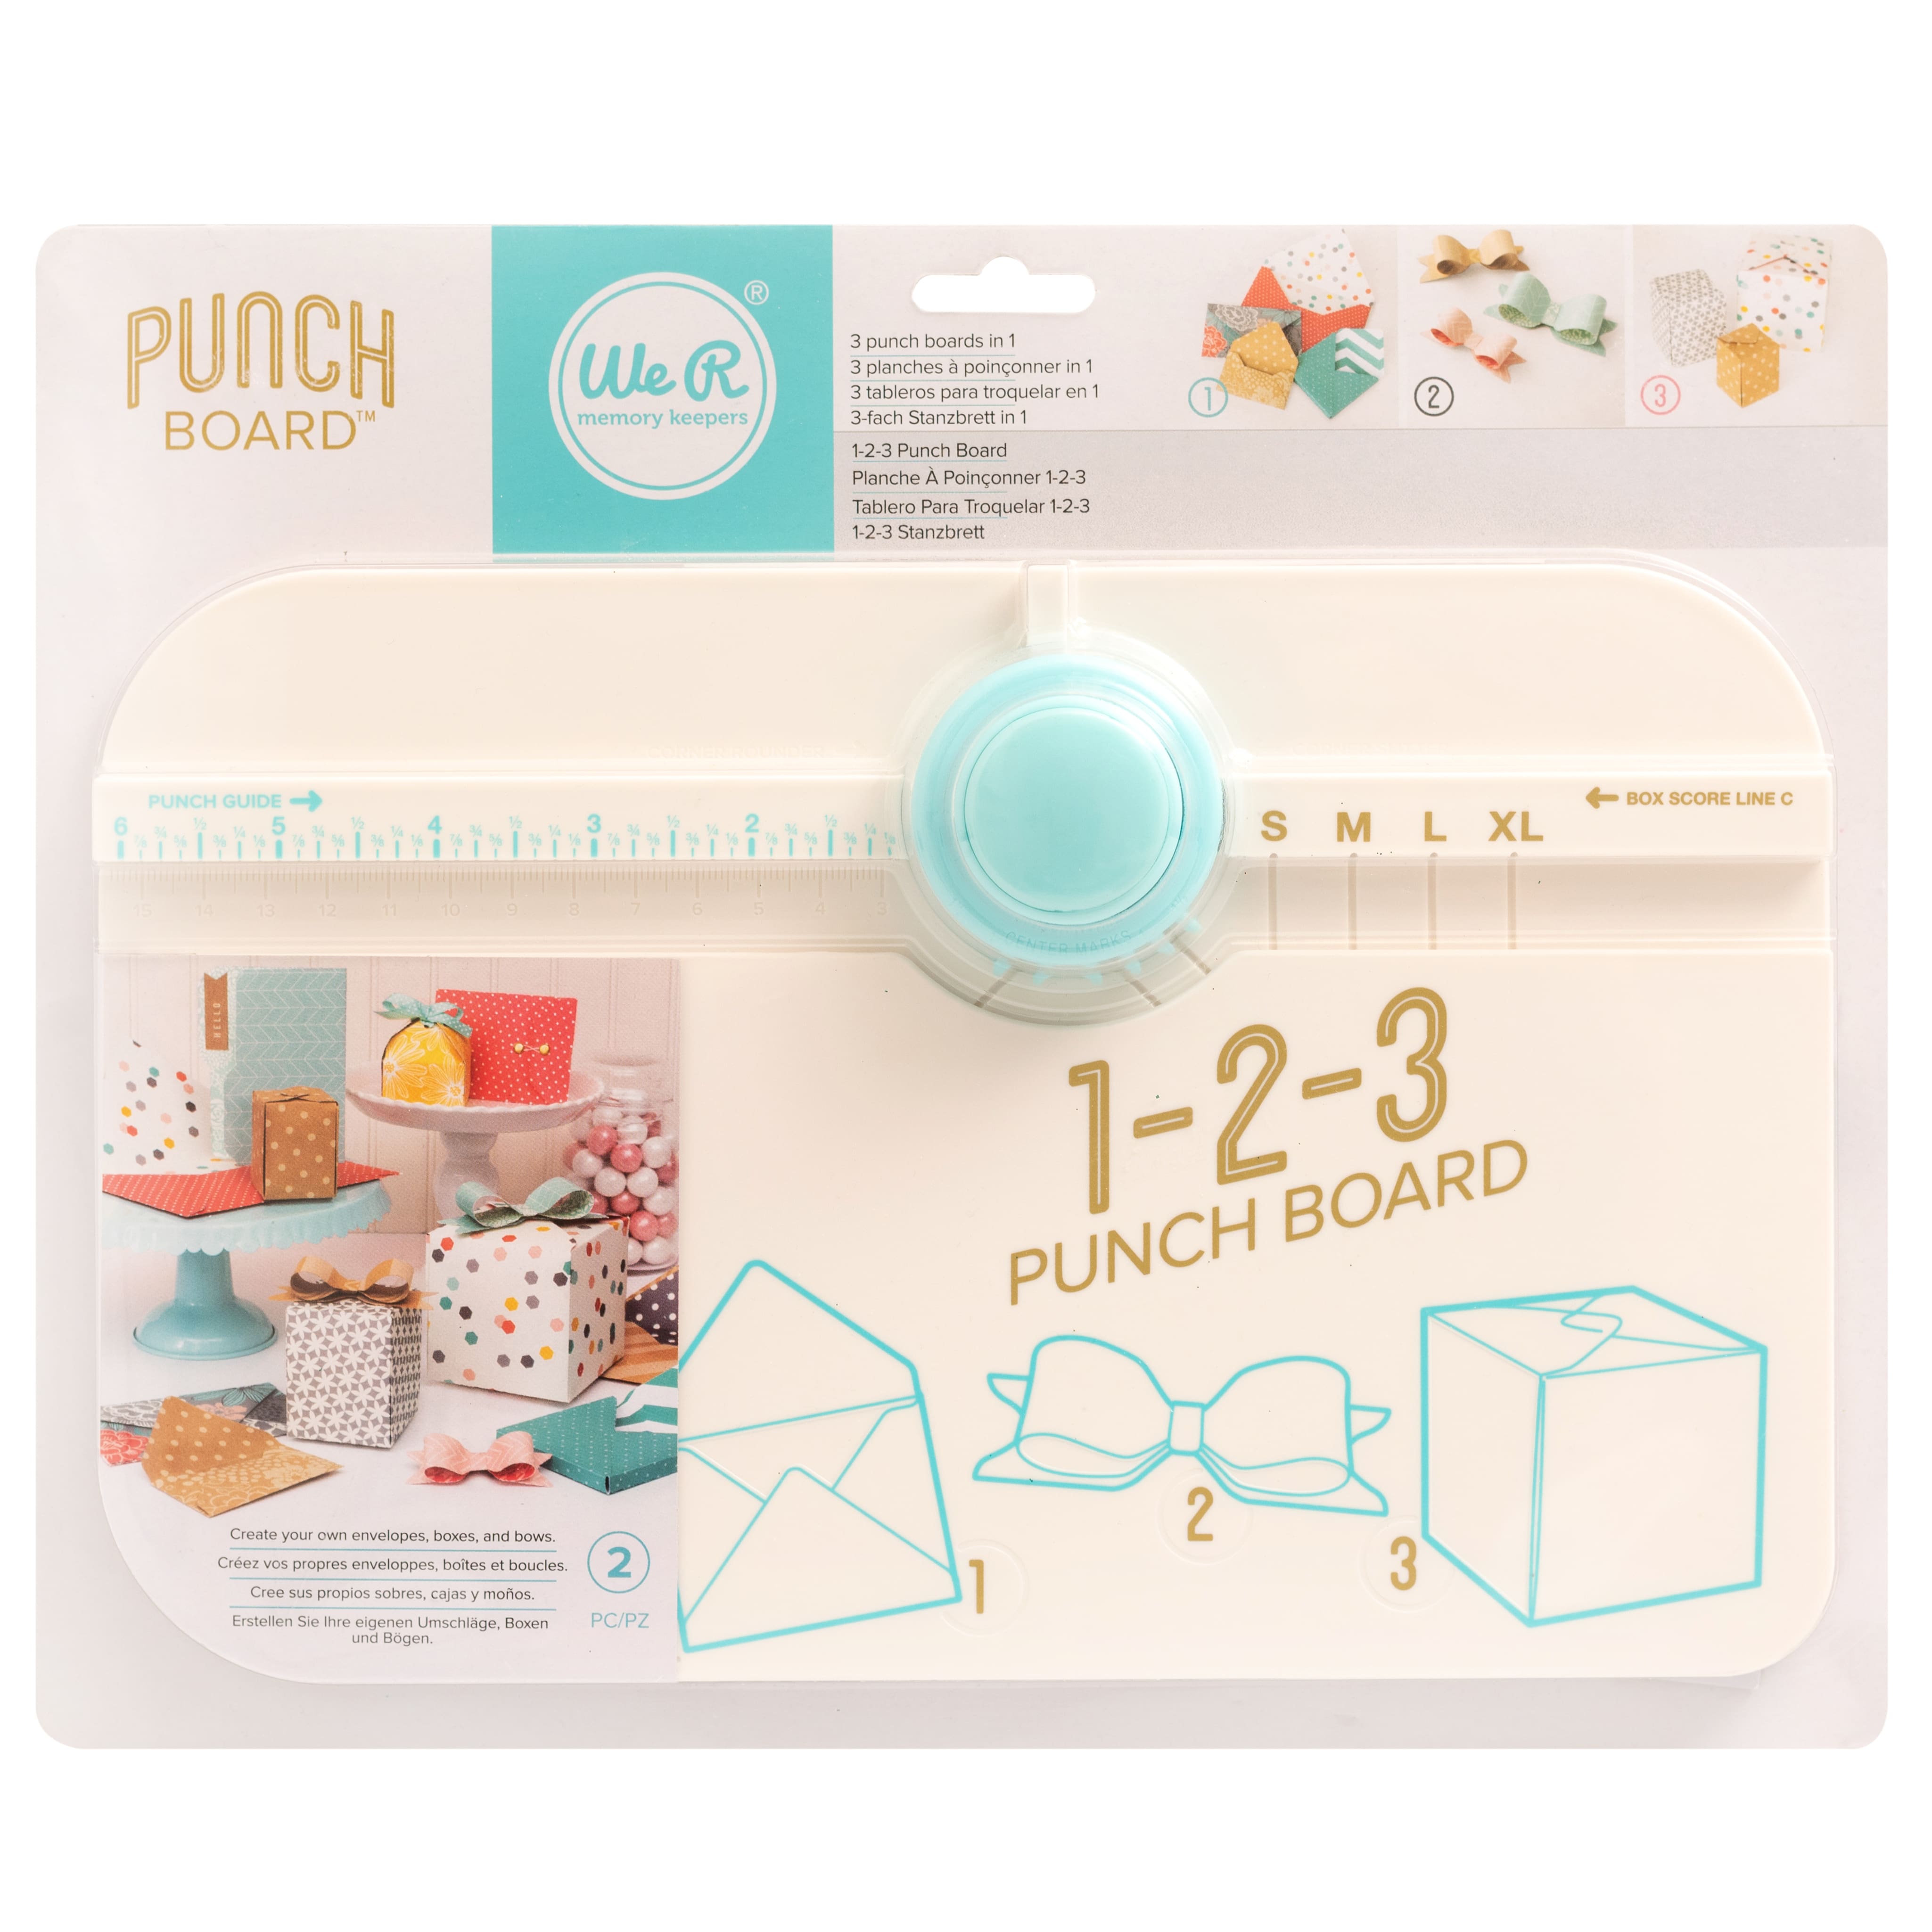 1-2-3 Punch Board Lined Envelope - Gagegirl